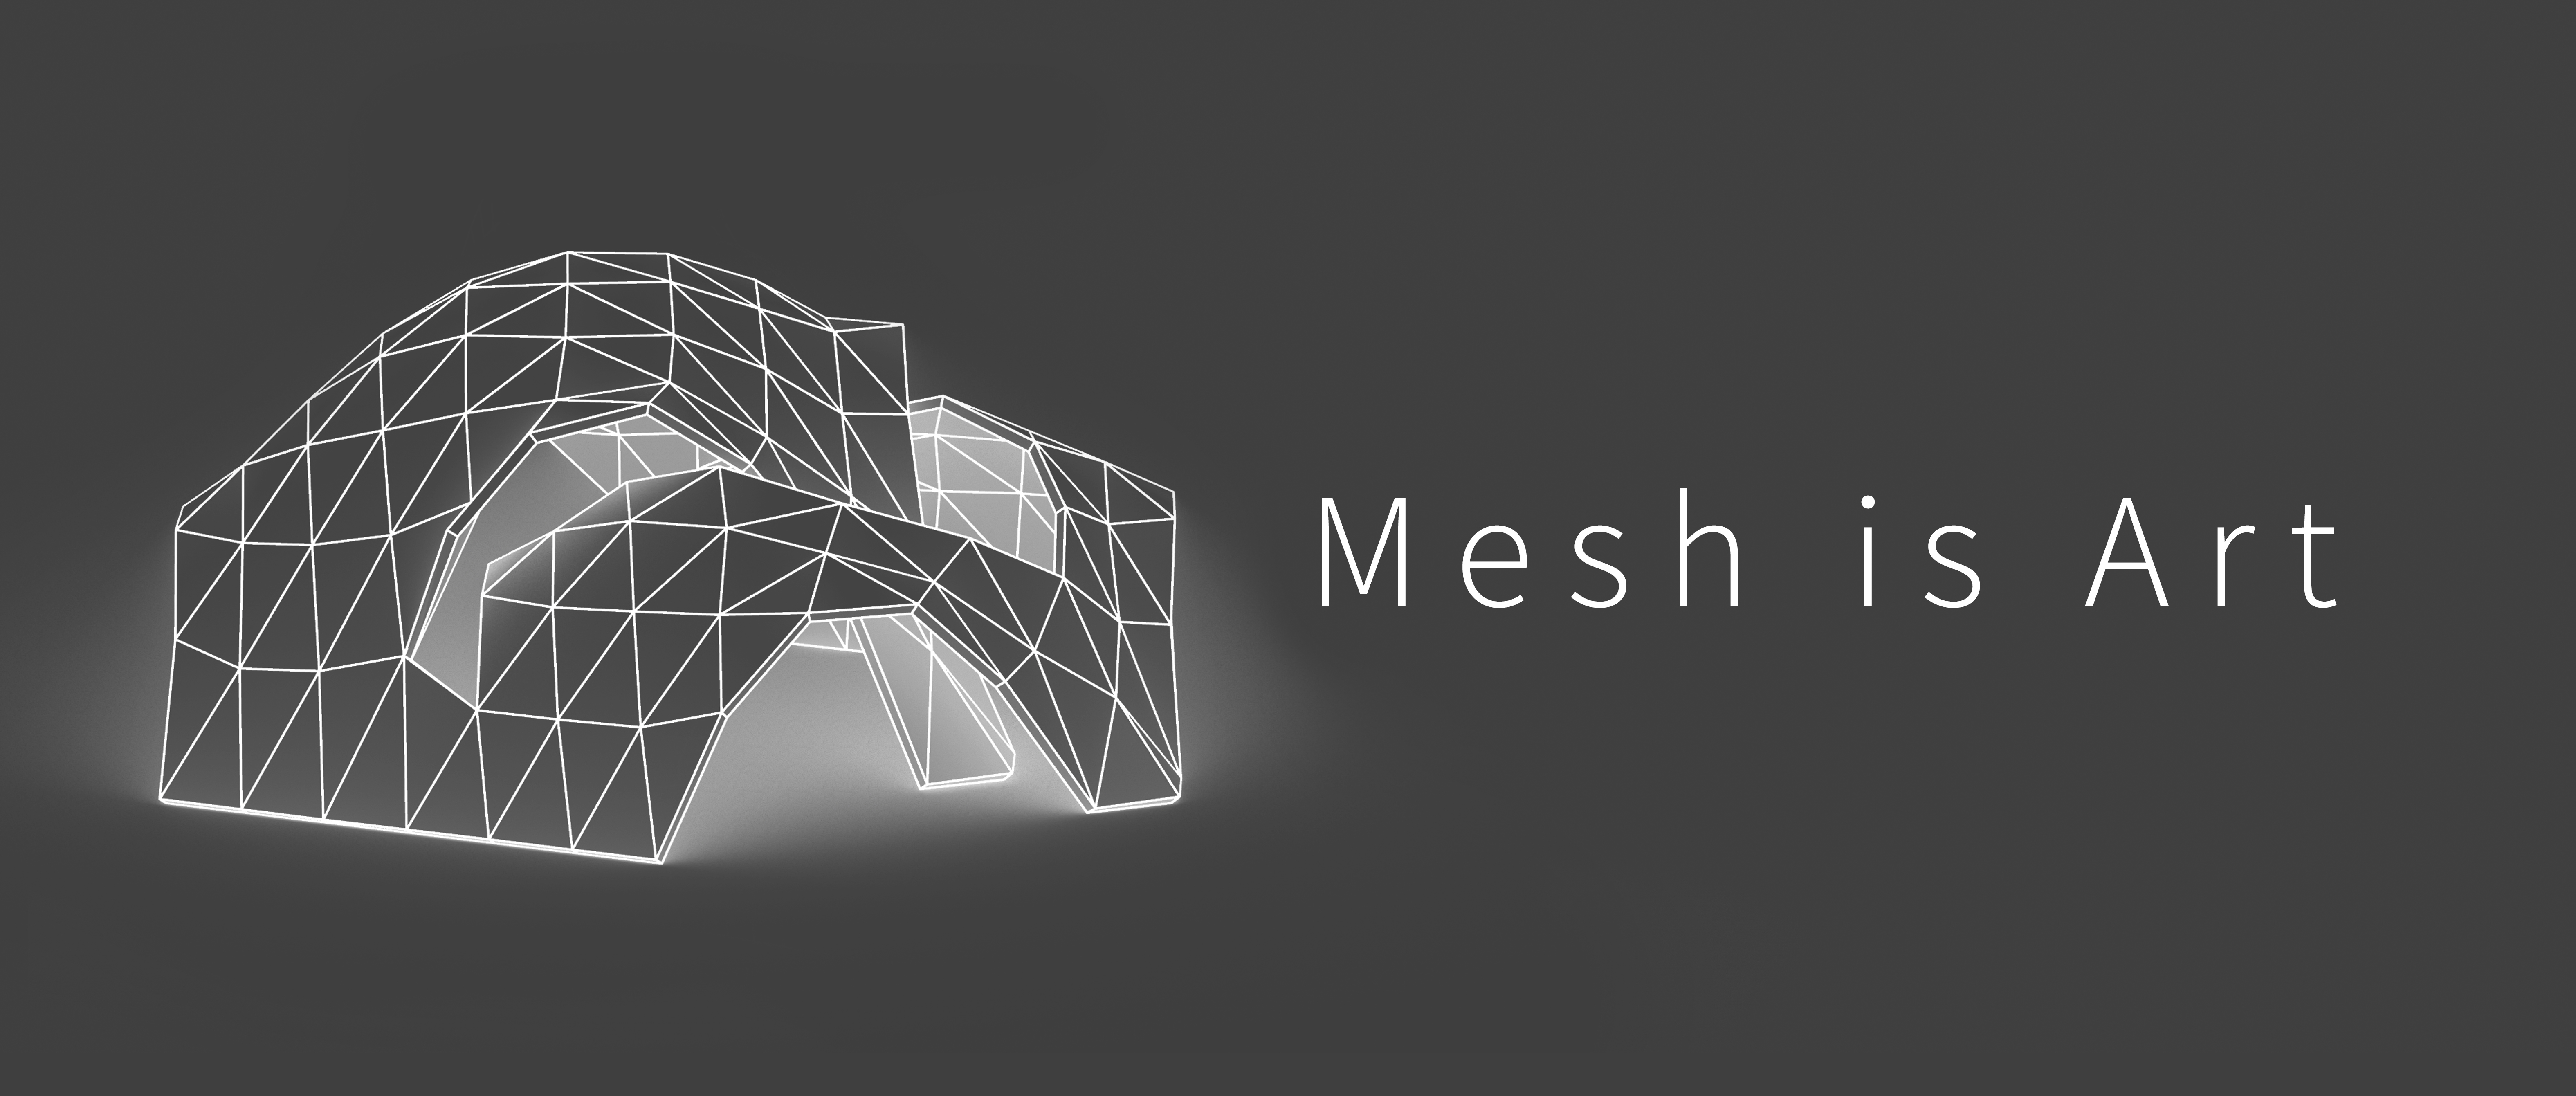 Mesh is Art (3): Half-Edge Data Structure